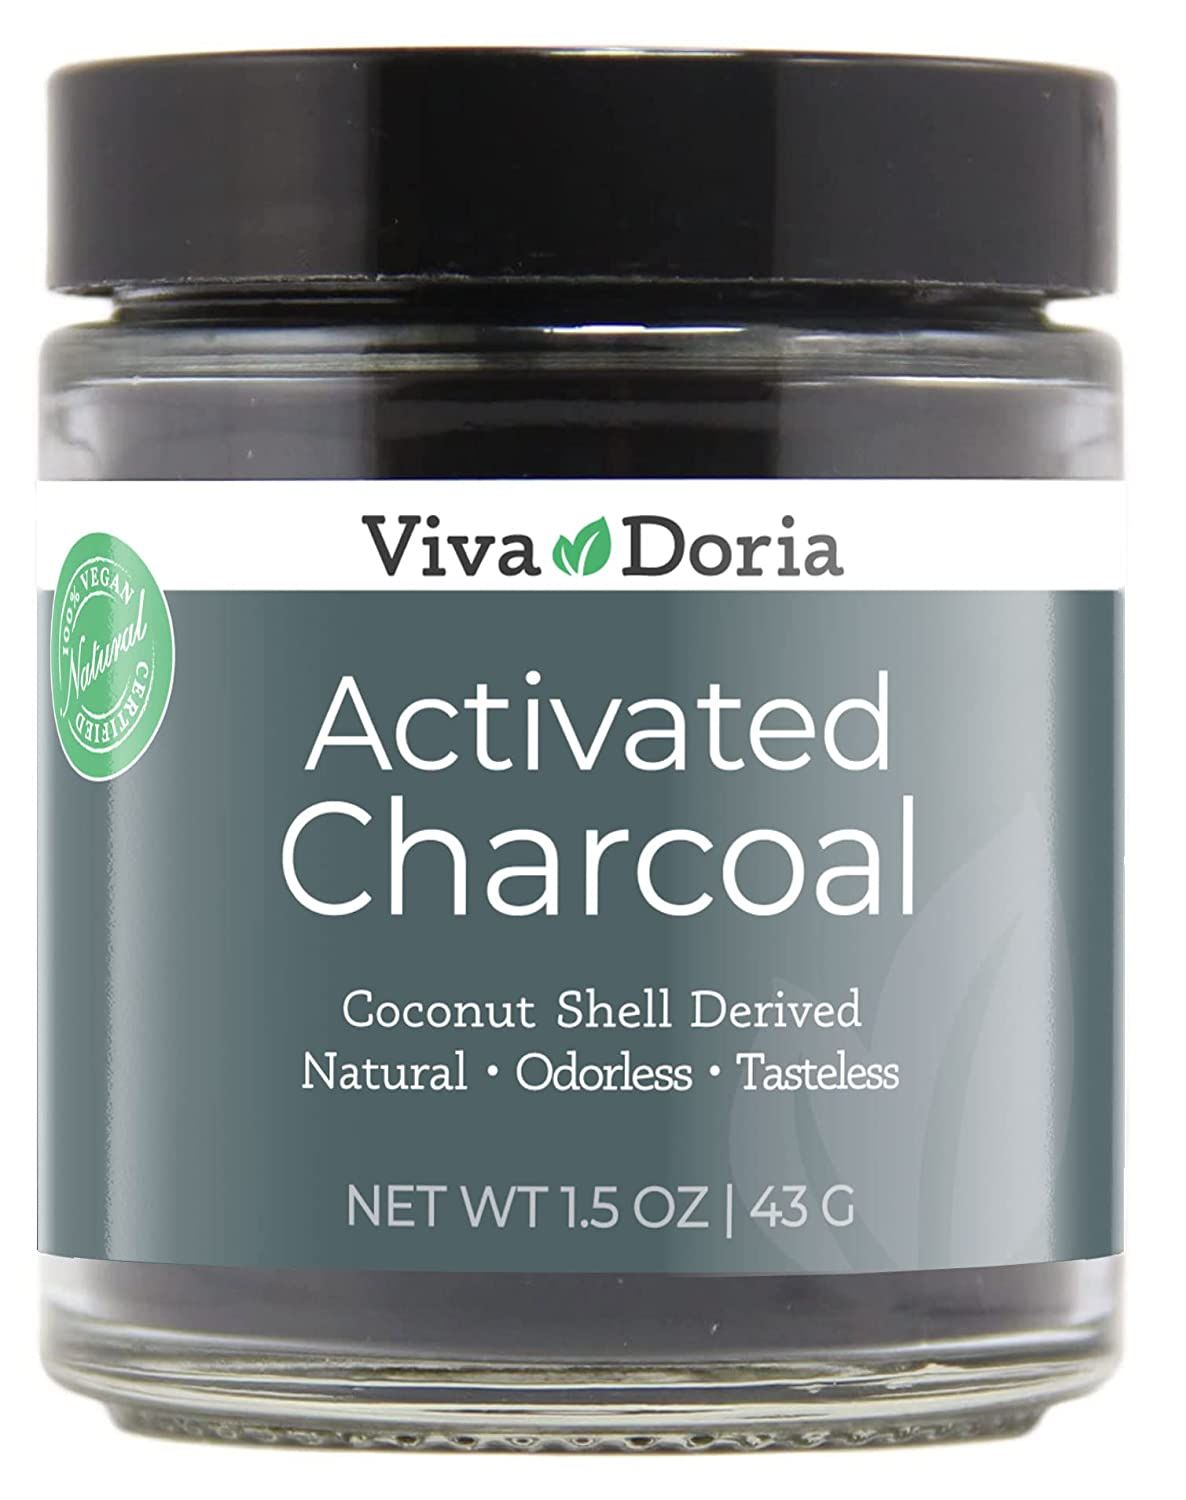 VIVADORIA Activated Charcoal Powder Image